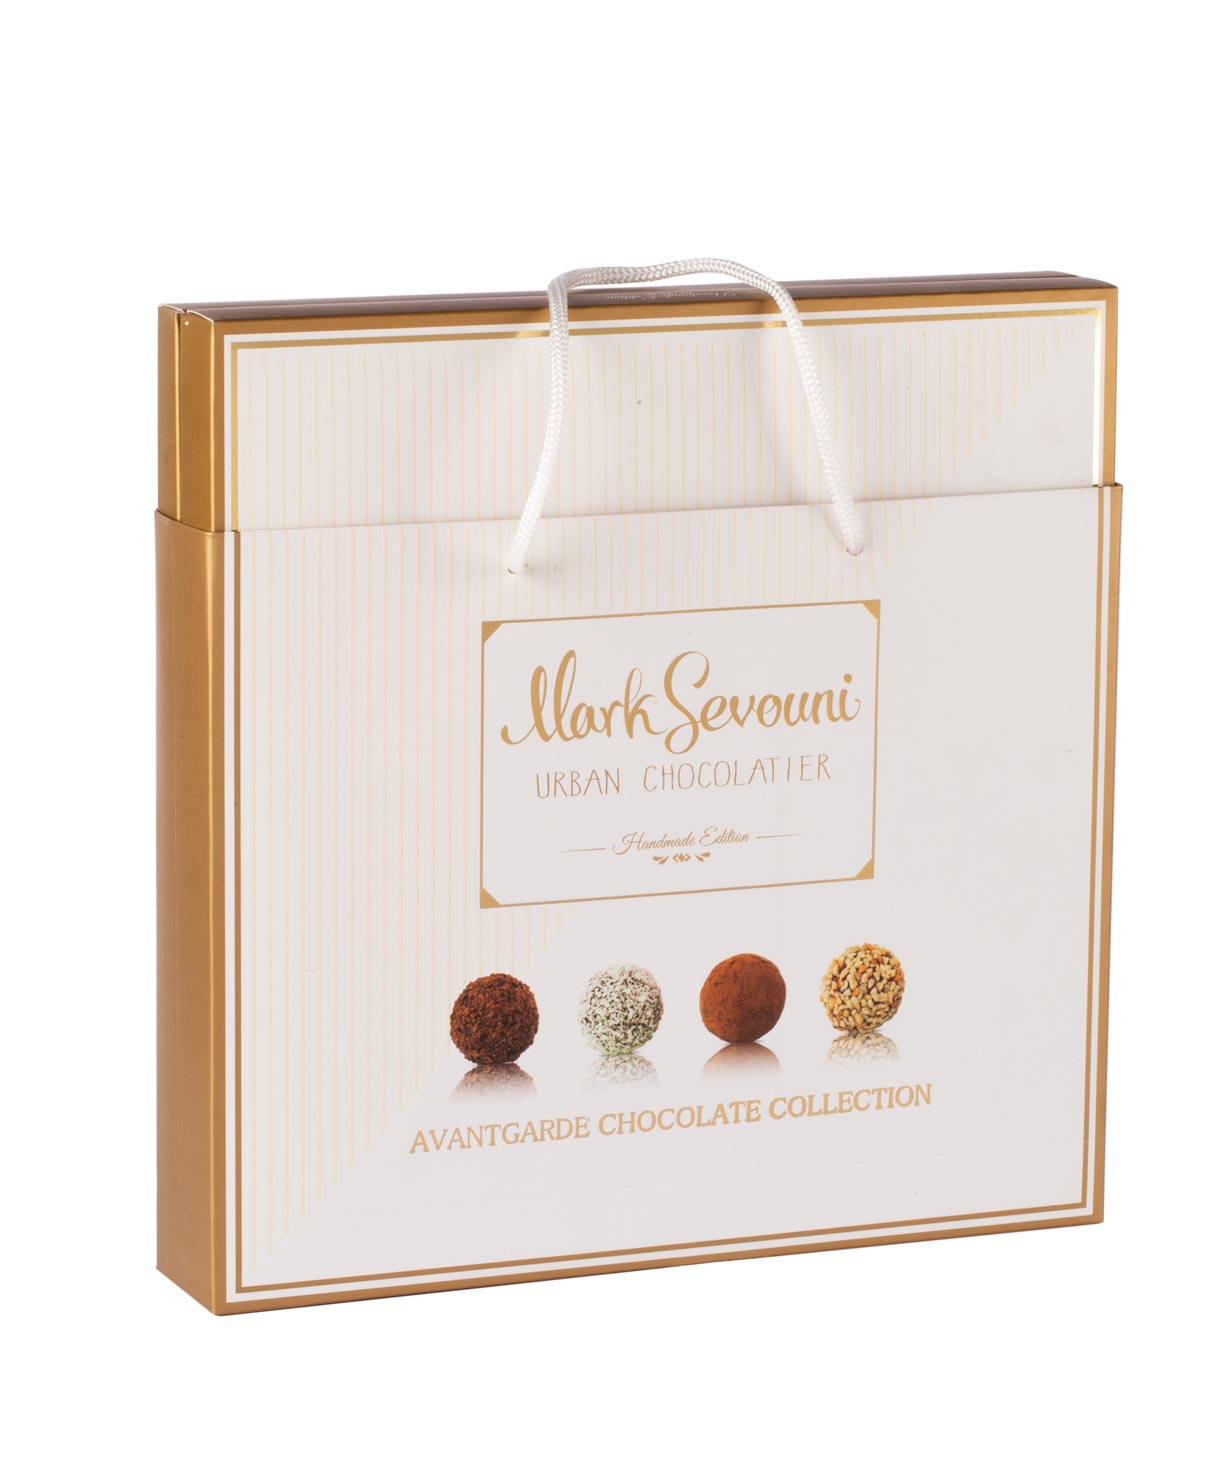 Шоколадная коллекция `Mark Sevouni` Avantgard Chocolate Collection 410г